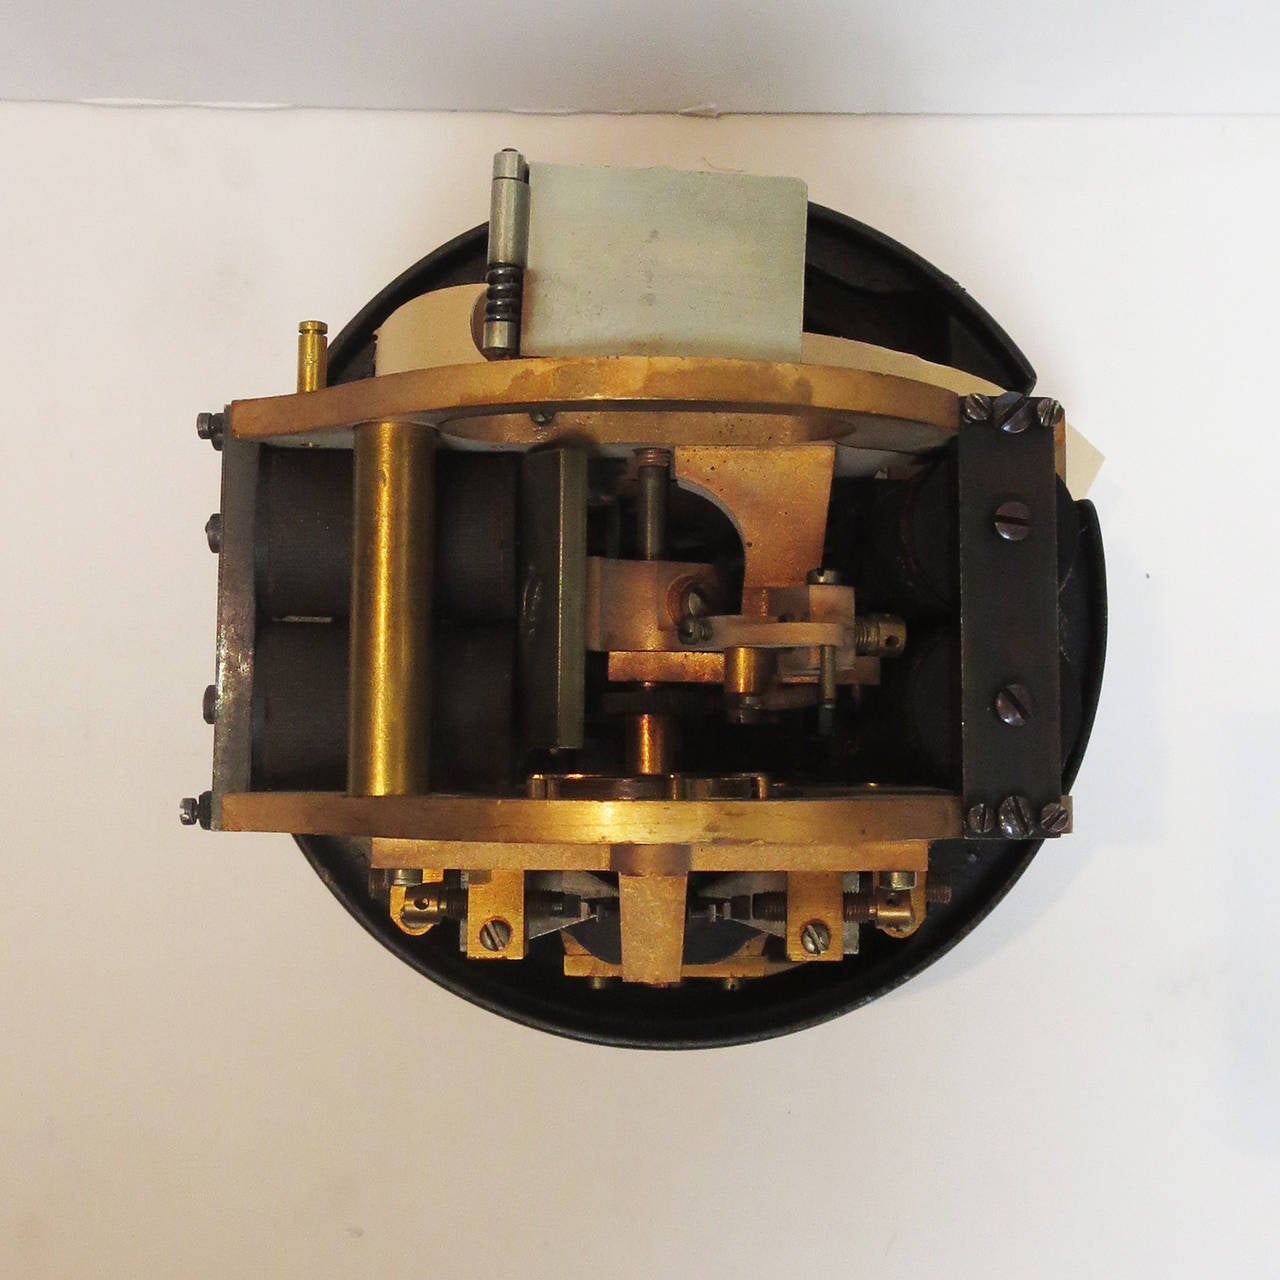 Early 20th Century Wall Street Stock Ticker Machine Designed by Thomas Edison